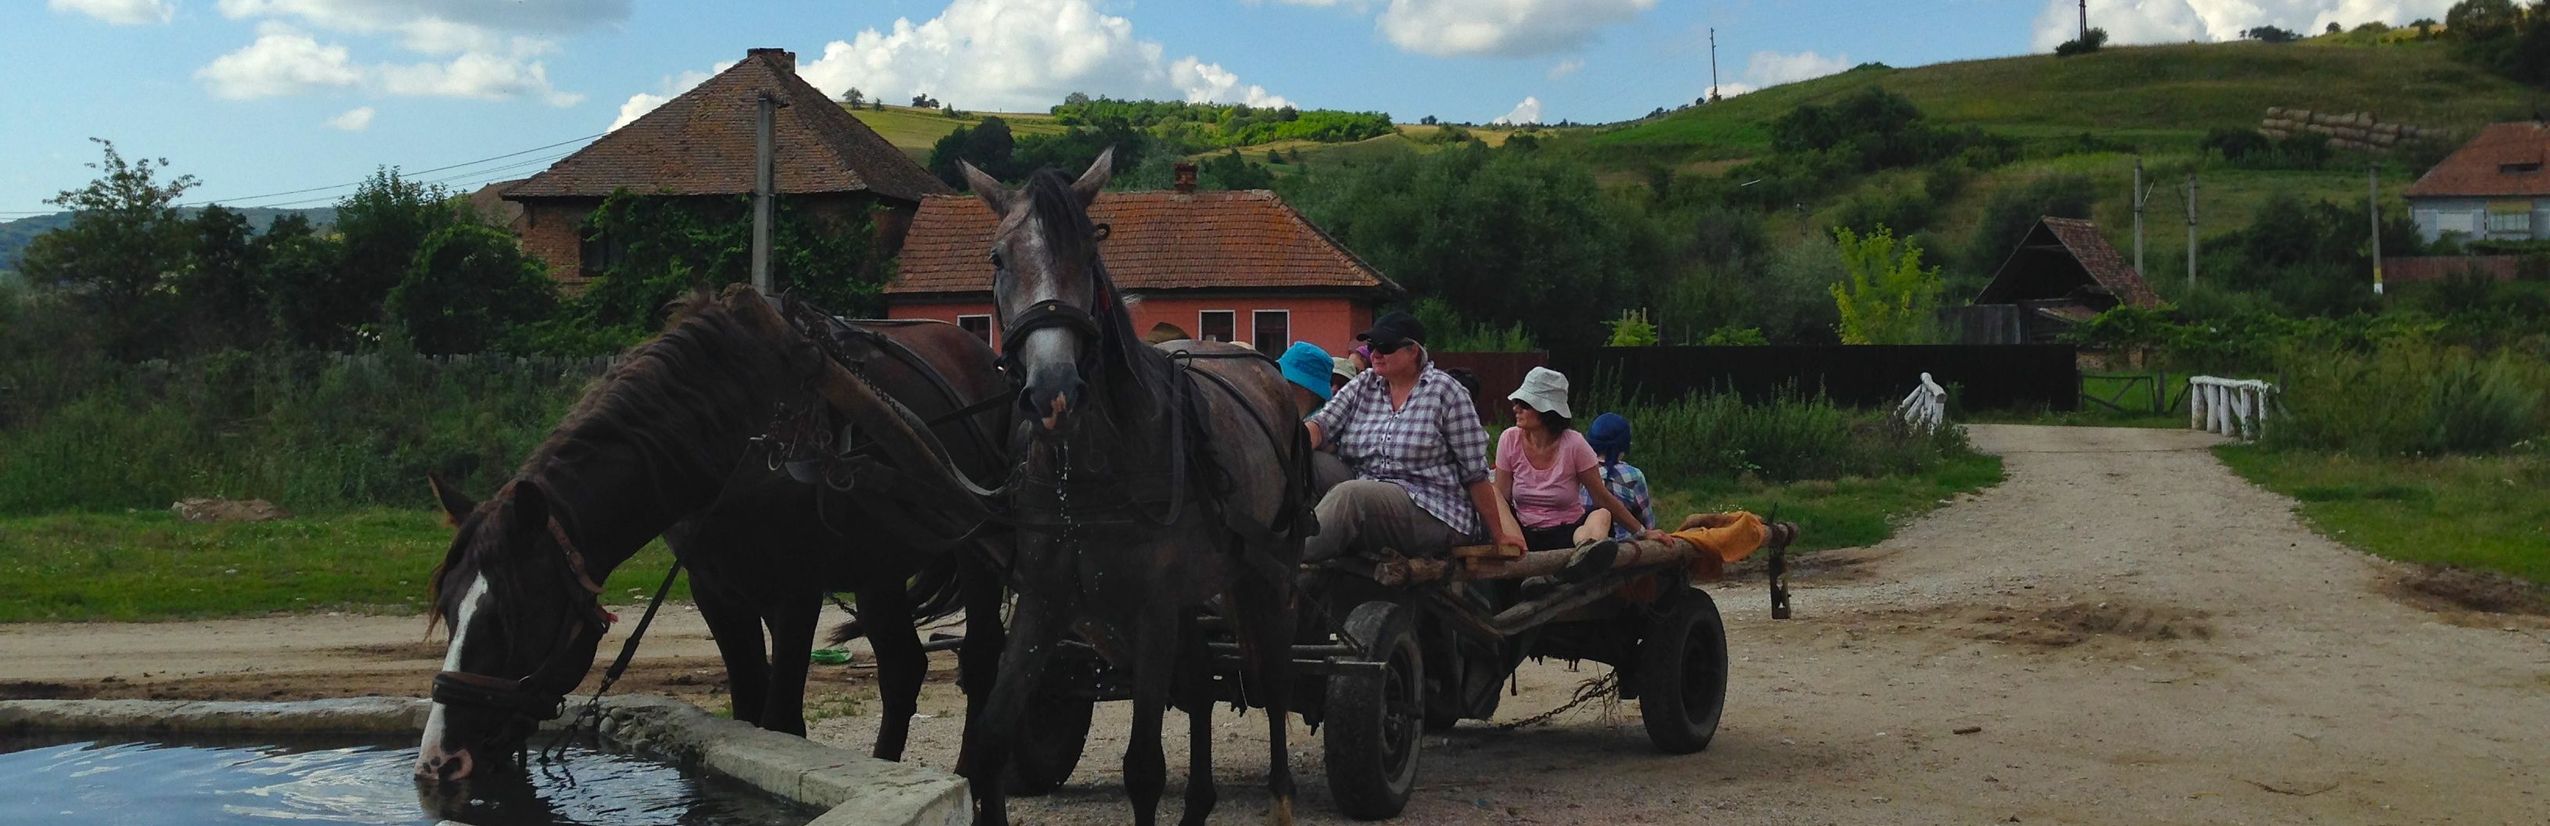 Familienreise Rumänien - Pferdekutsche